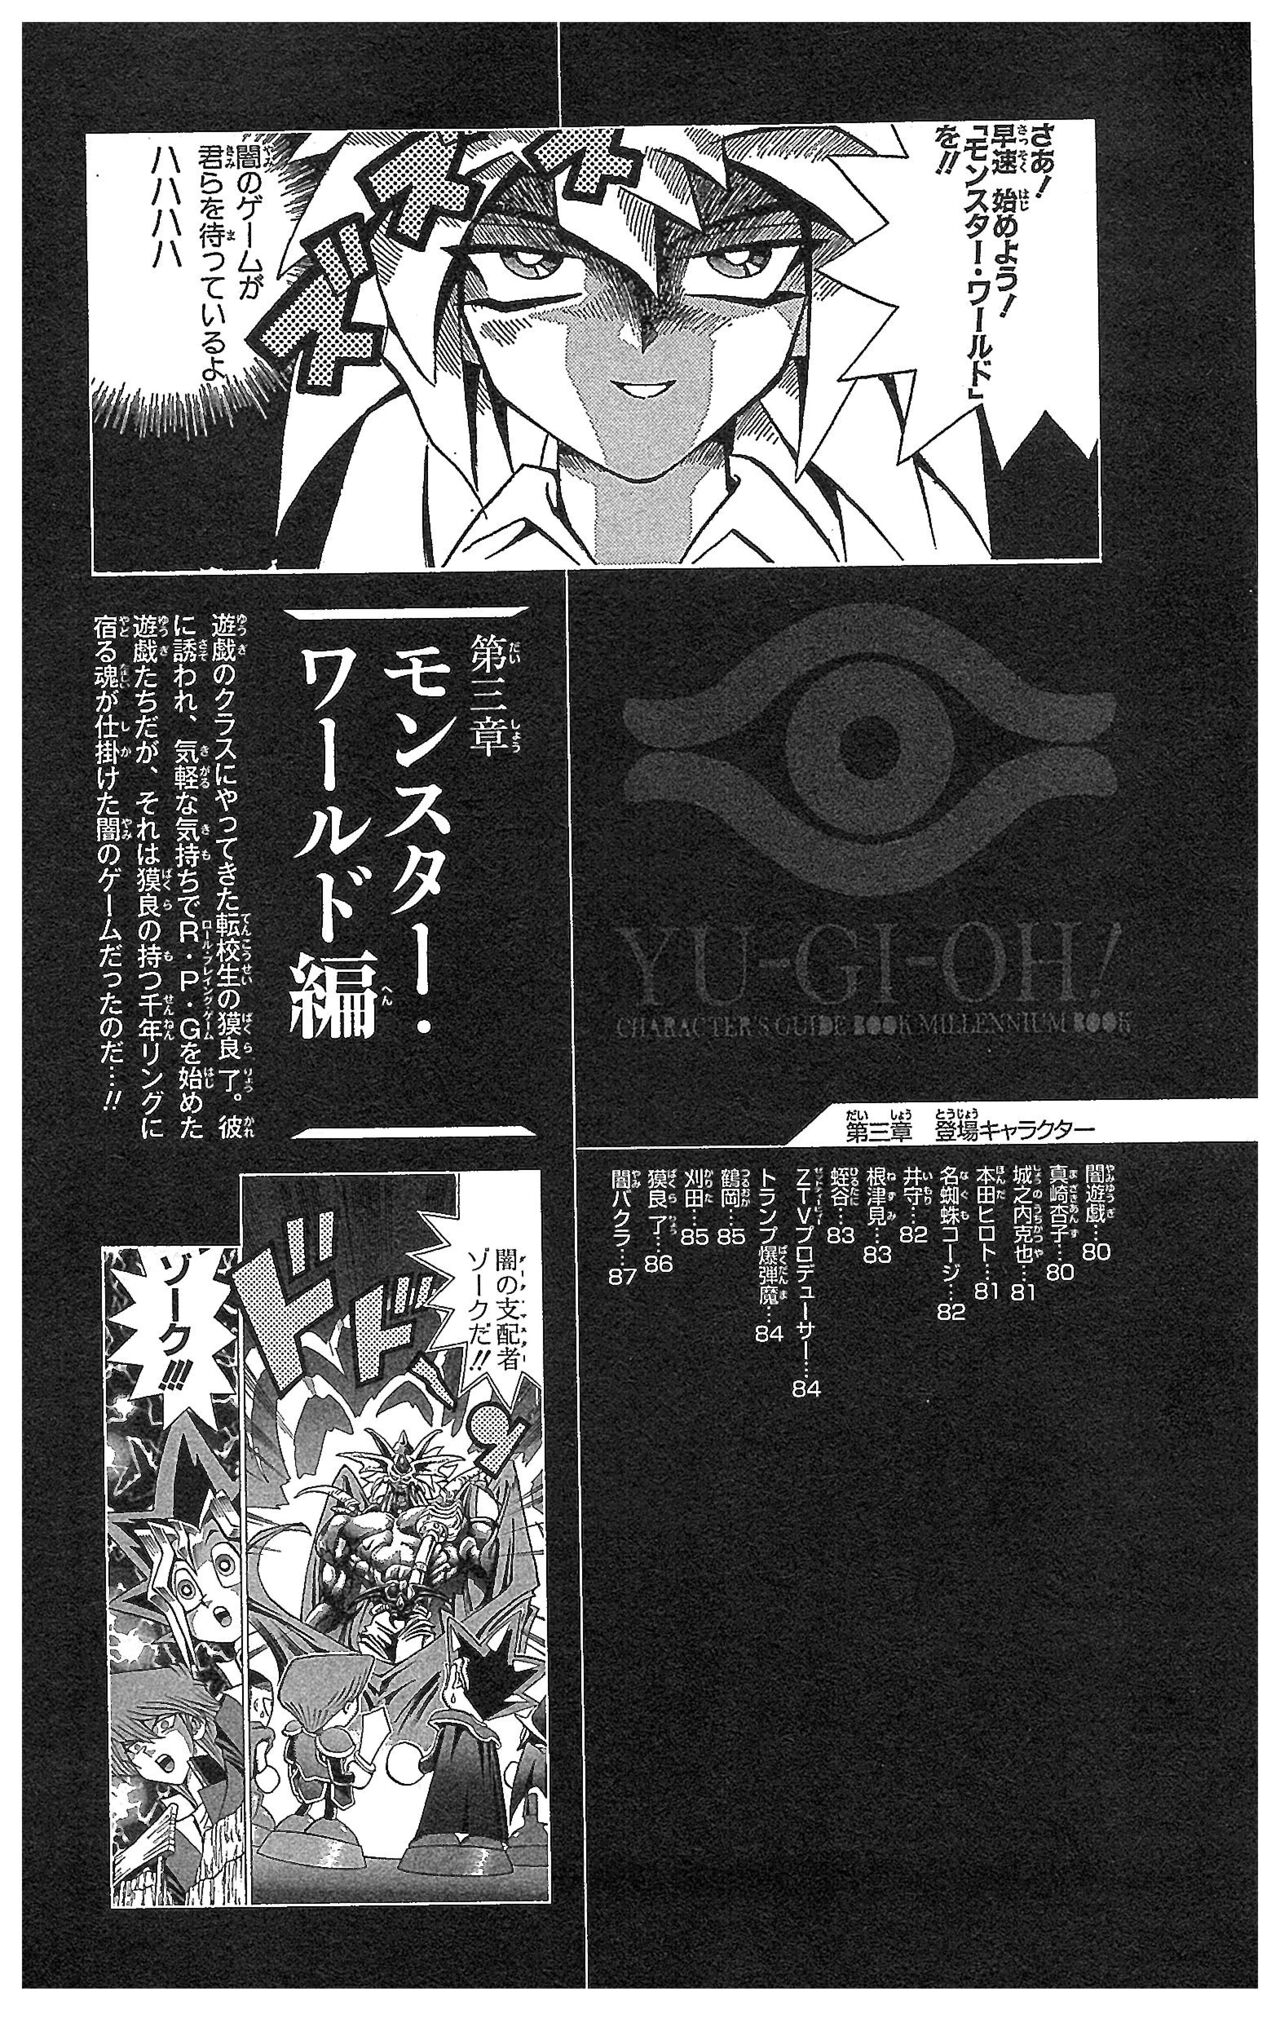 Yu-Gi-Oh! Character Guidebook: Millennium Book 73